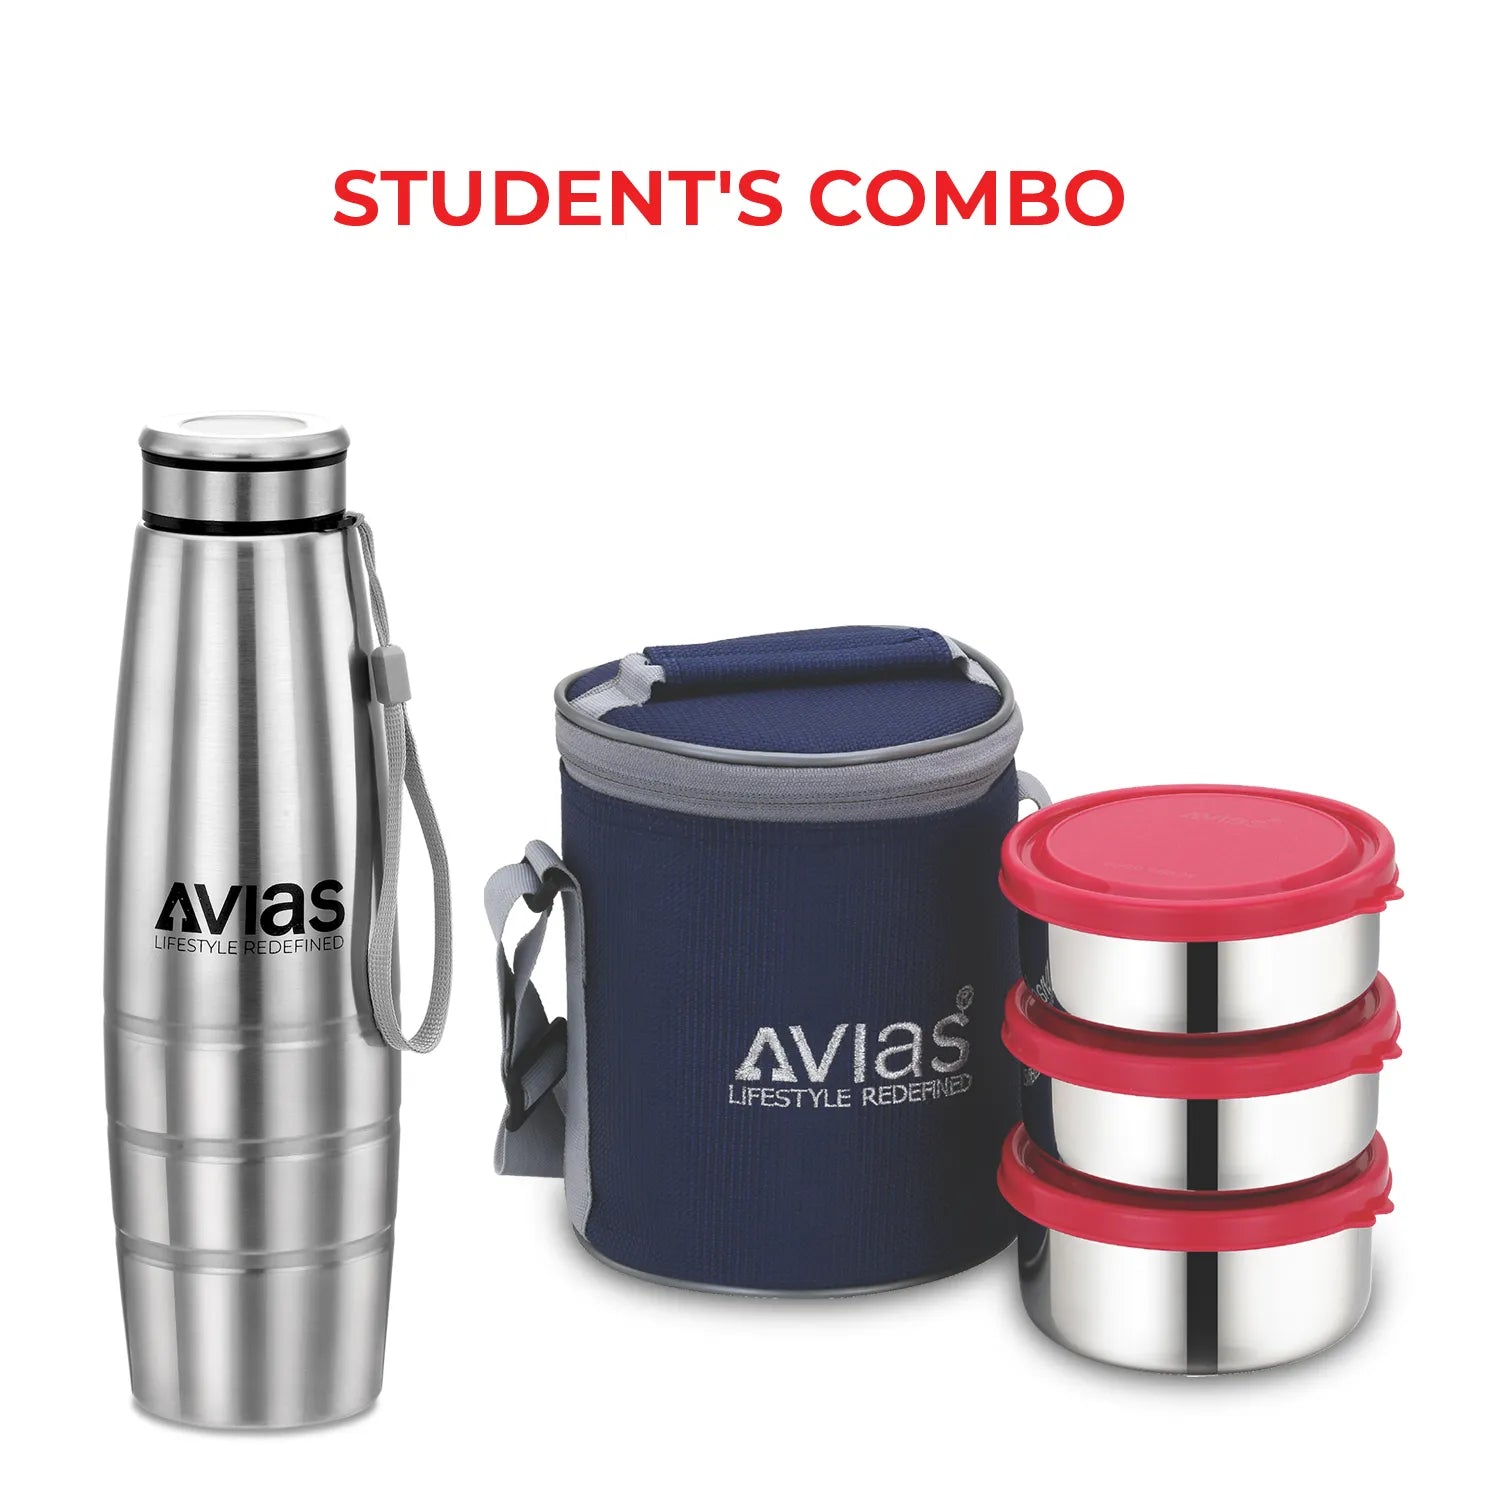 AVIAS Student’s Combo - Freshia R3 Lunch box & Premia SS bottle 1000ml